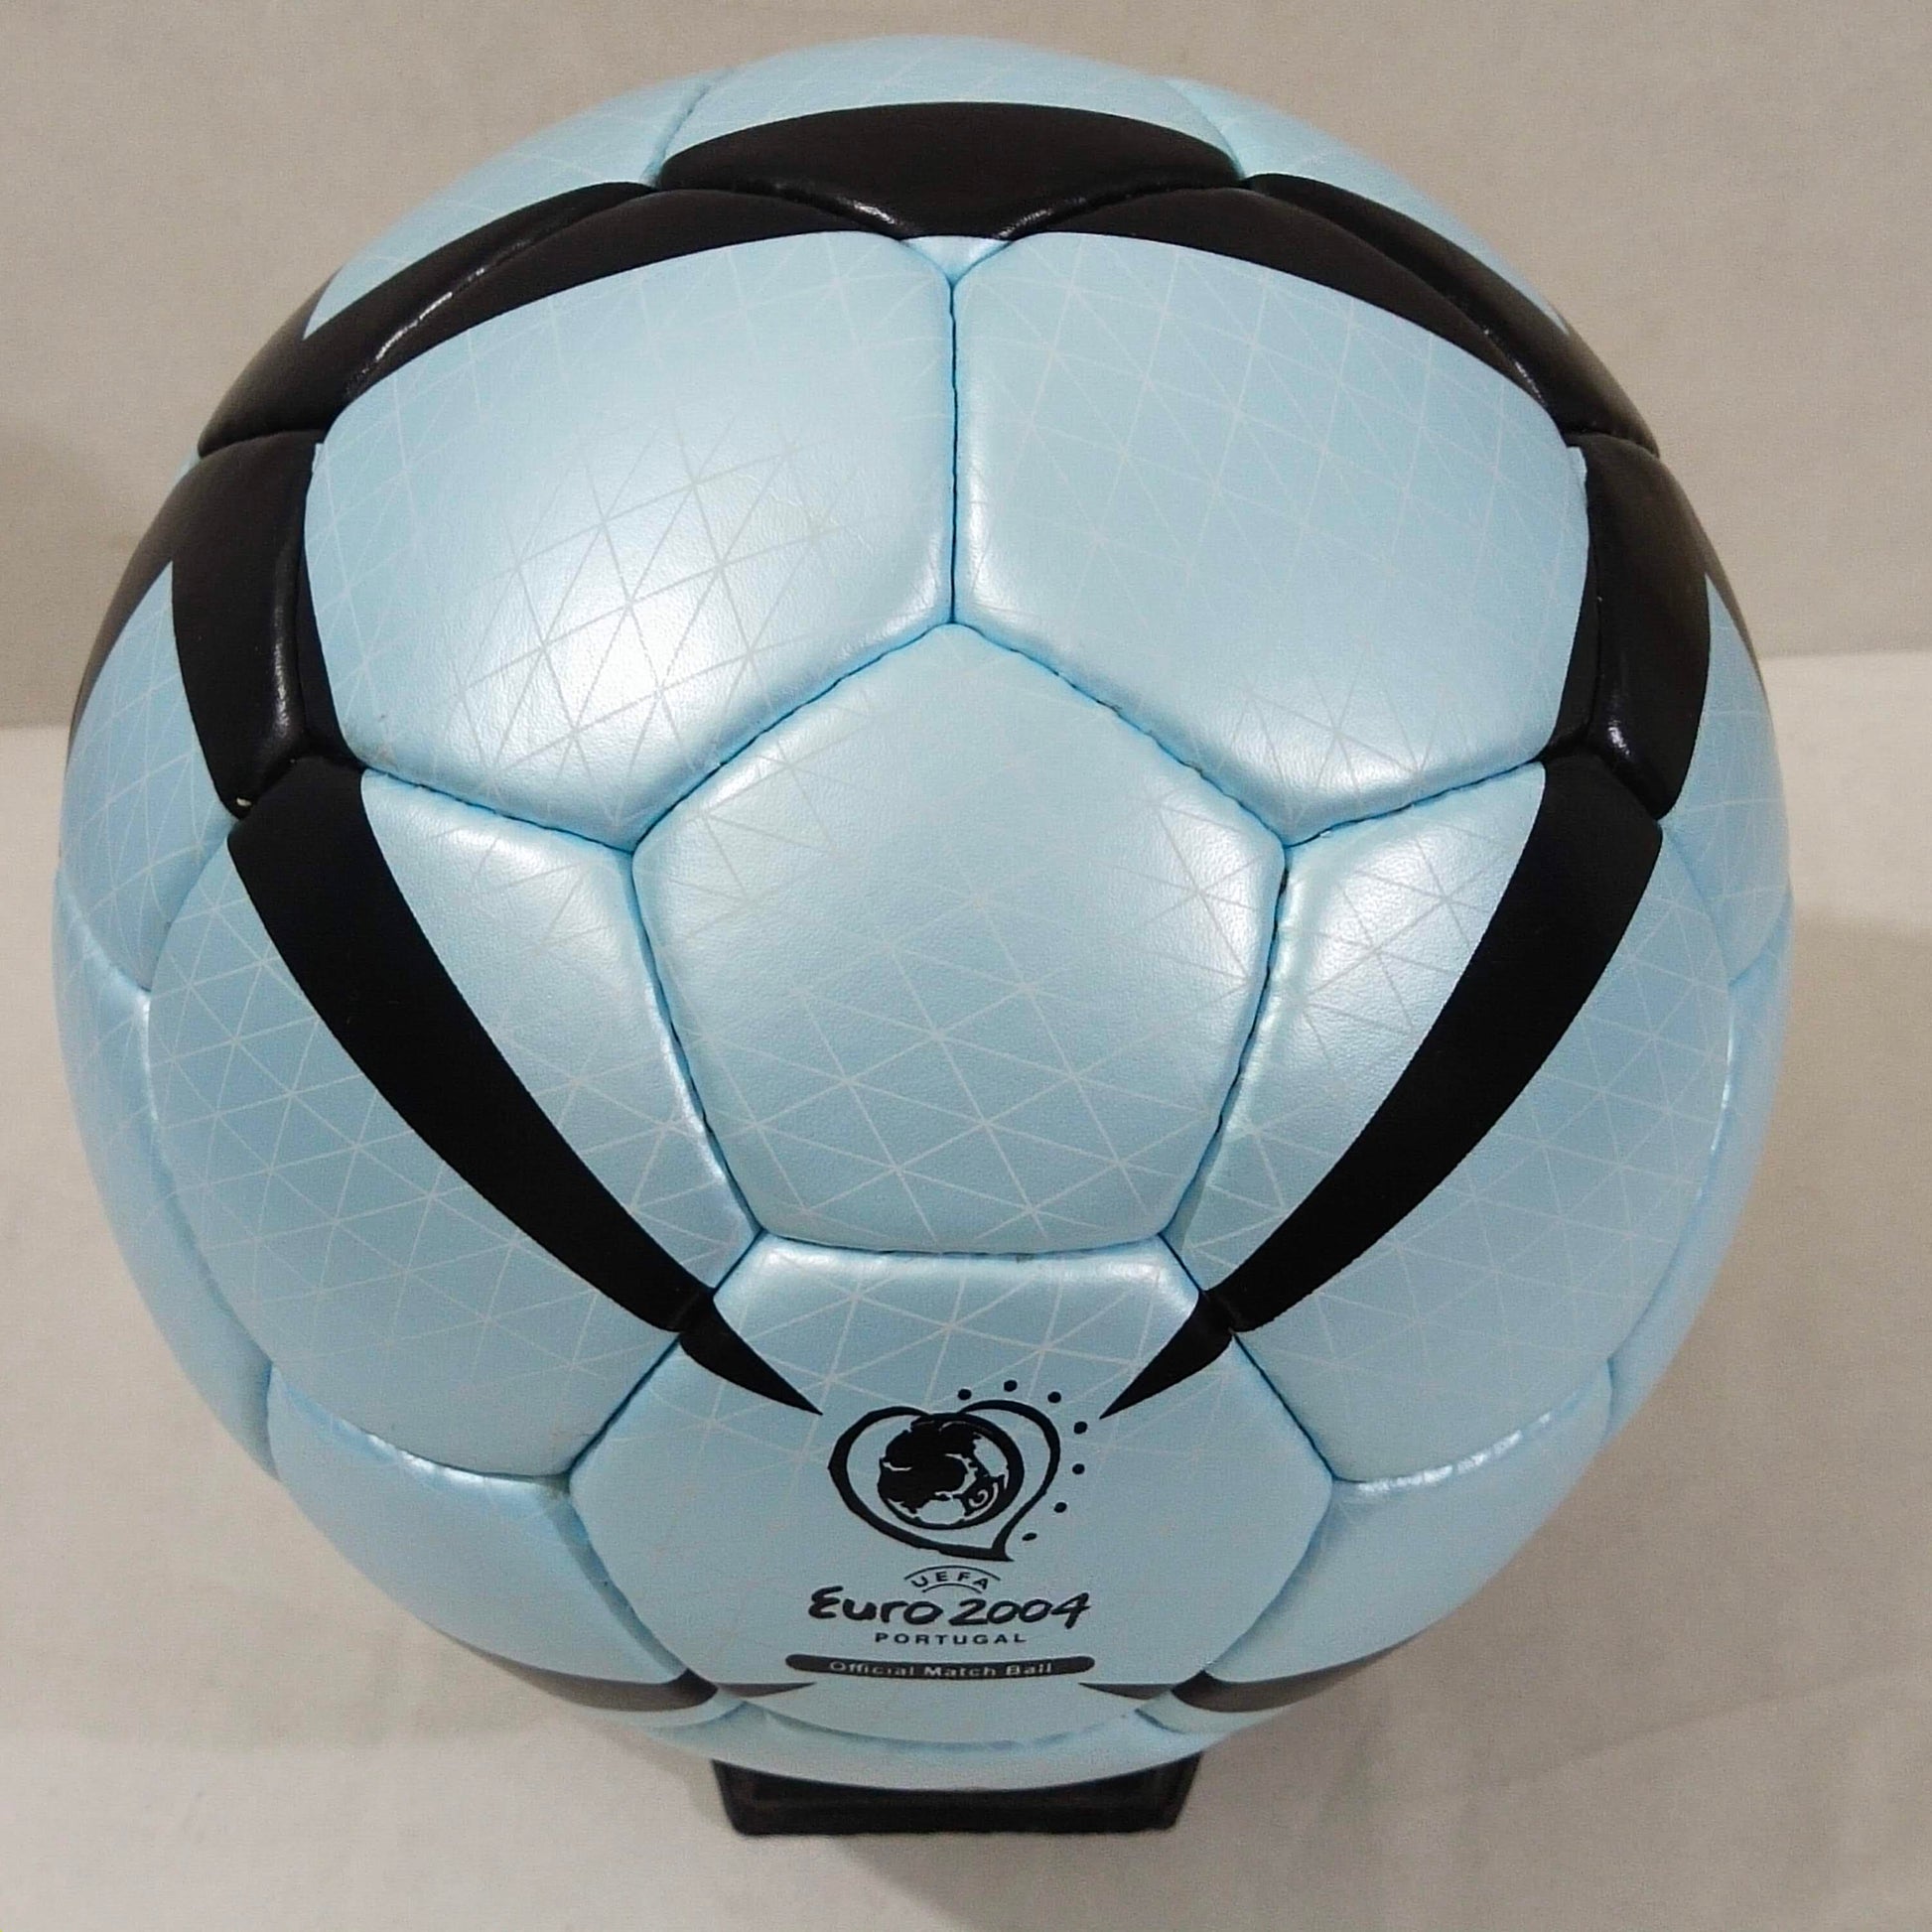 Adidas Roteiro Grand Stade | 2004 | UEFA Europa League | Official Match Ball | Size 5 03